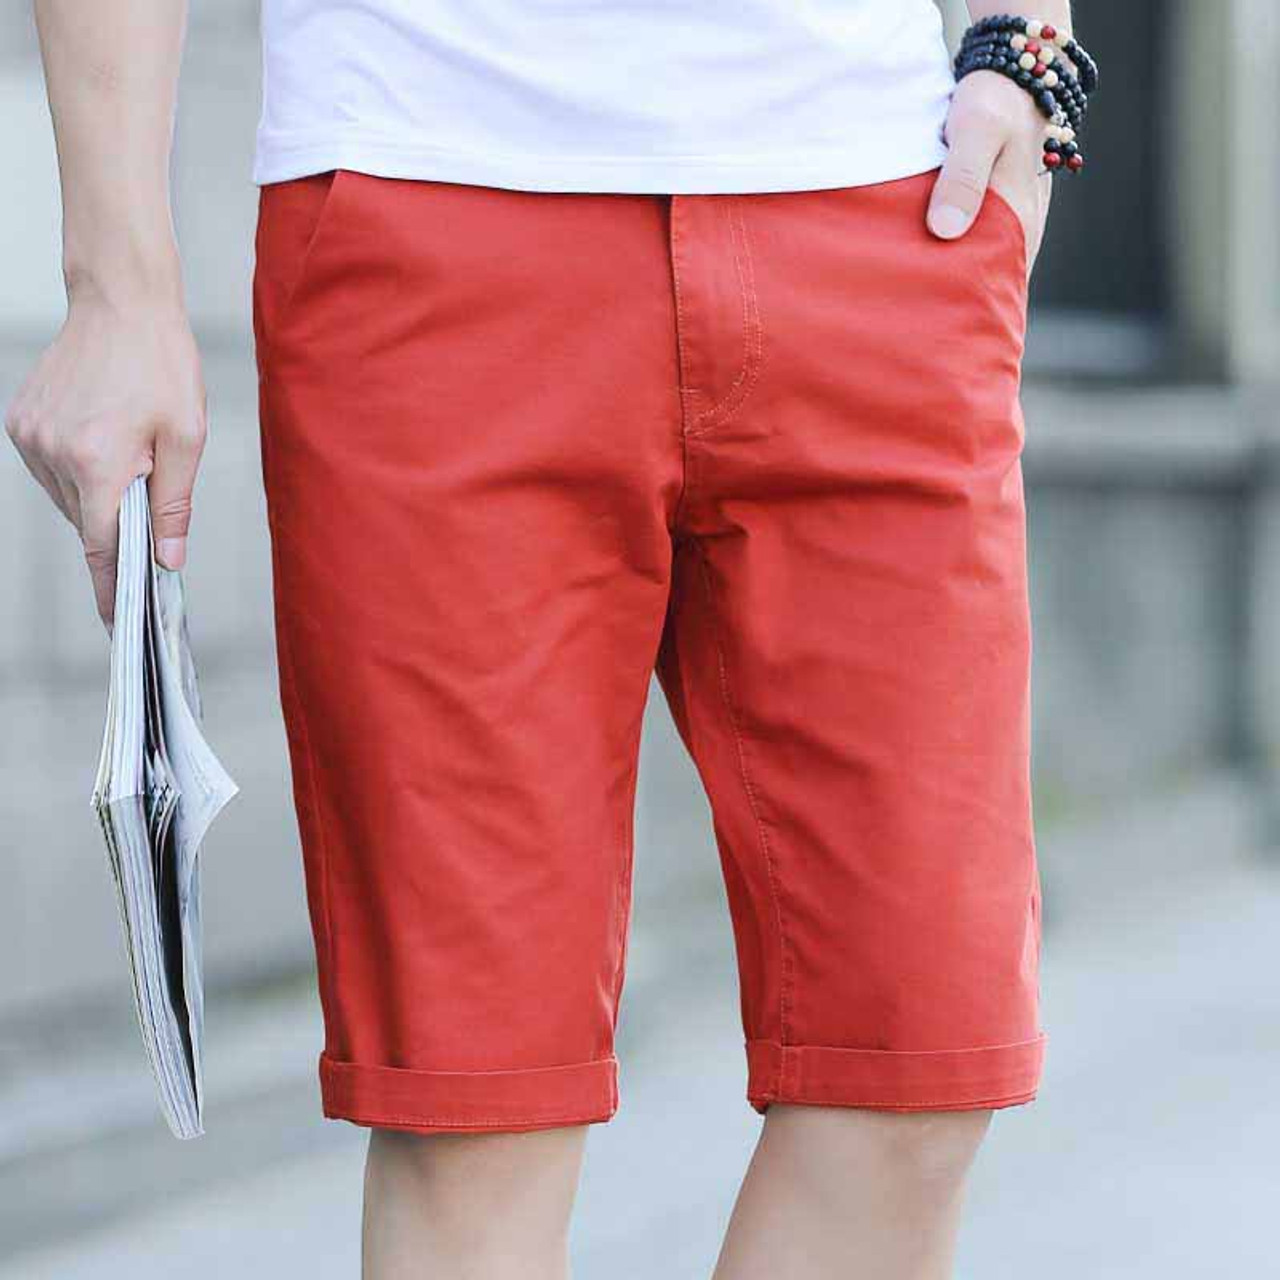 Kameel Rentmeester Weigering Orange red short casual plain color zip fly | Mens shorts online 1009MP